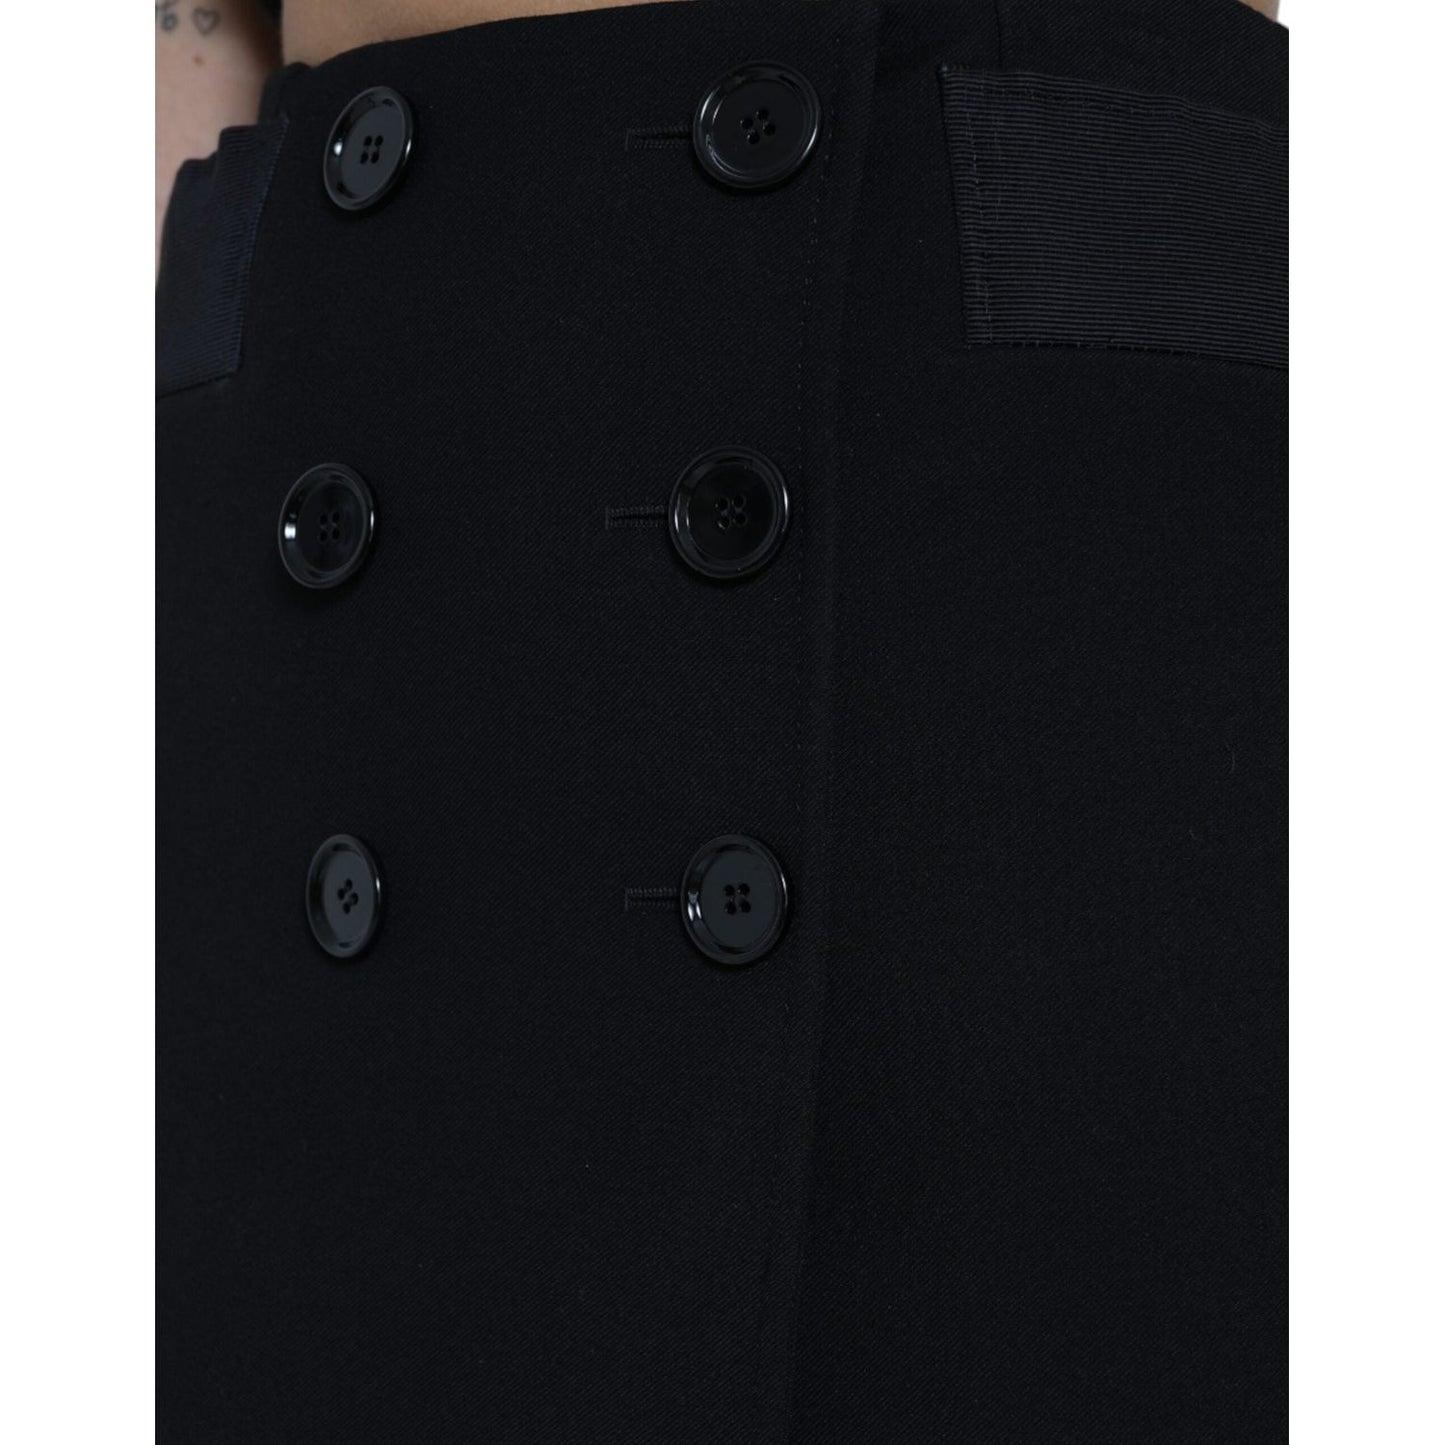 Dolce & Gabbana Elegant High-Waist A-Line Mini Skirt black-wool-button-high-waist-aline-mini-skirt